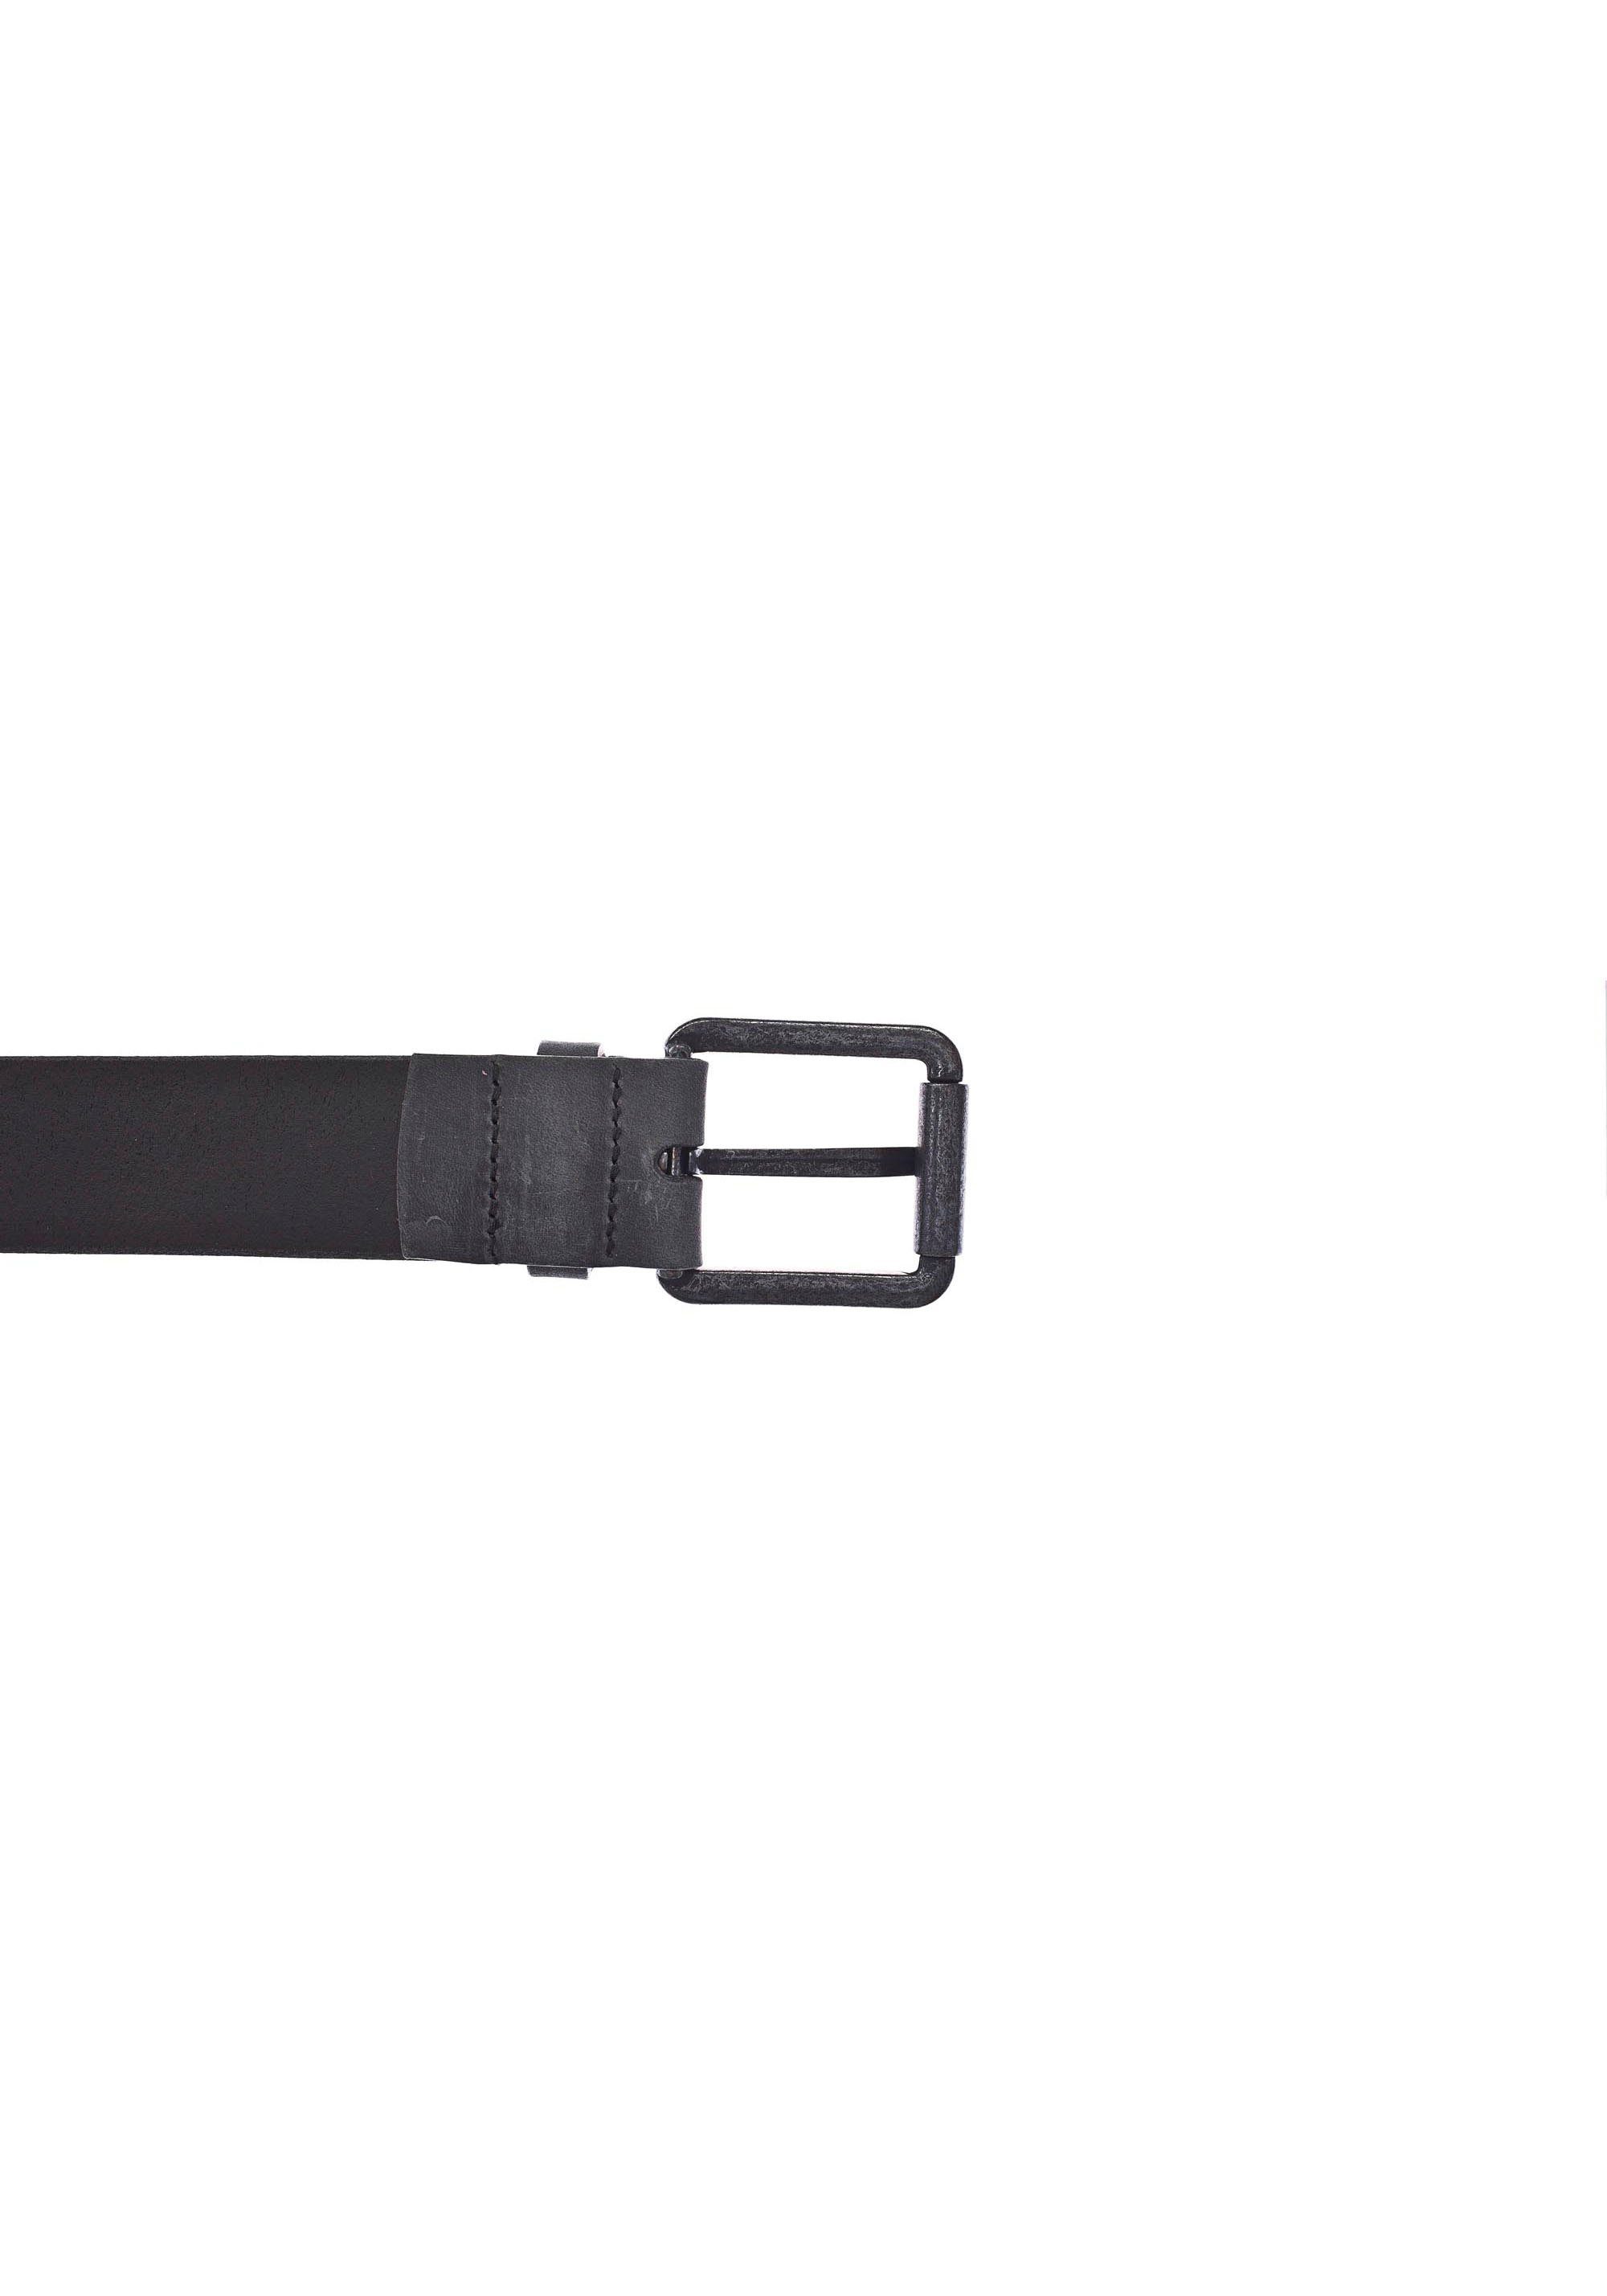 Spitze Ledergürtel MUSTANG Logo-Blindprägung auf black der